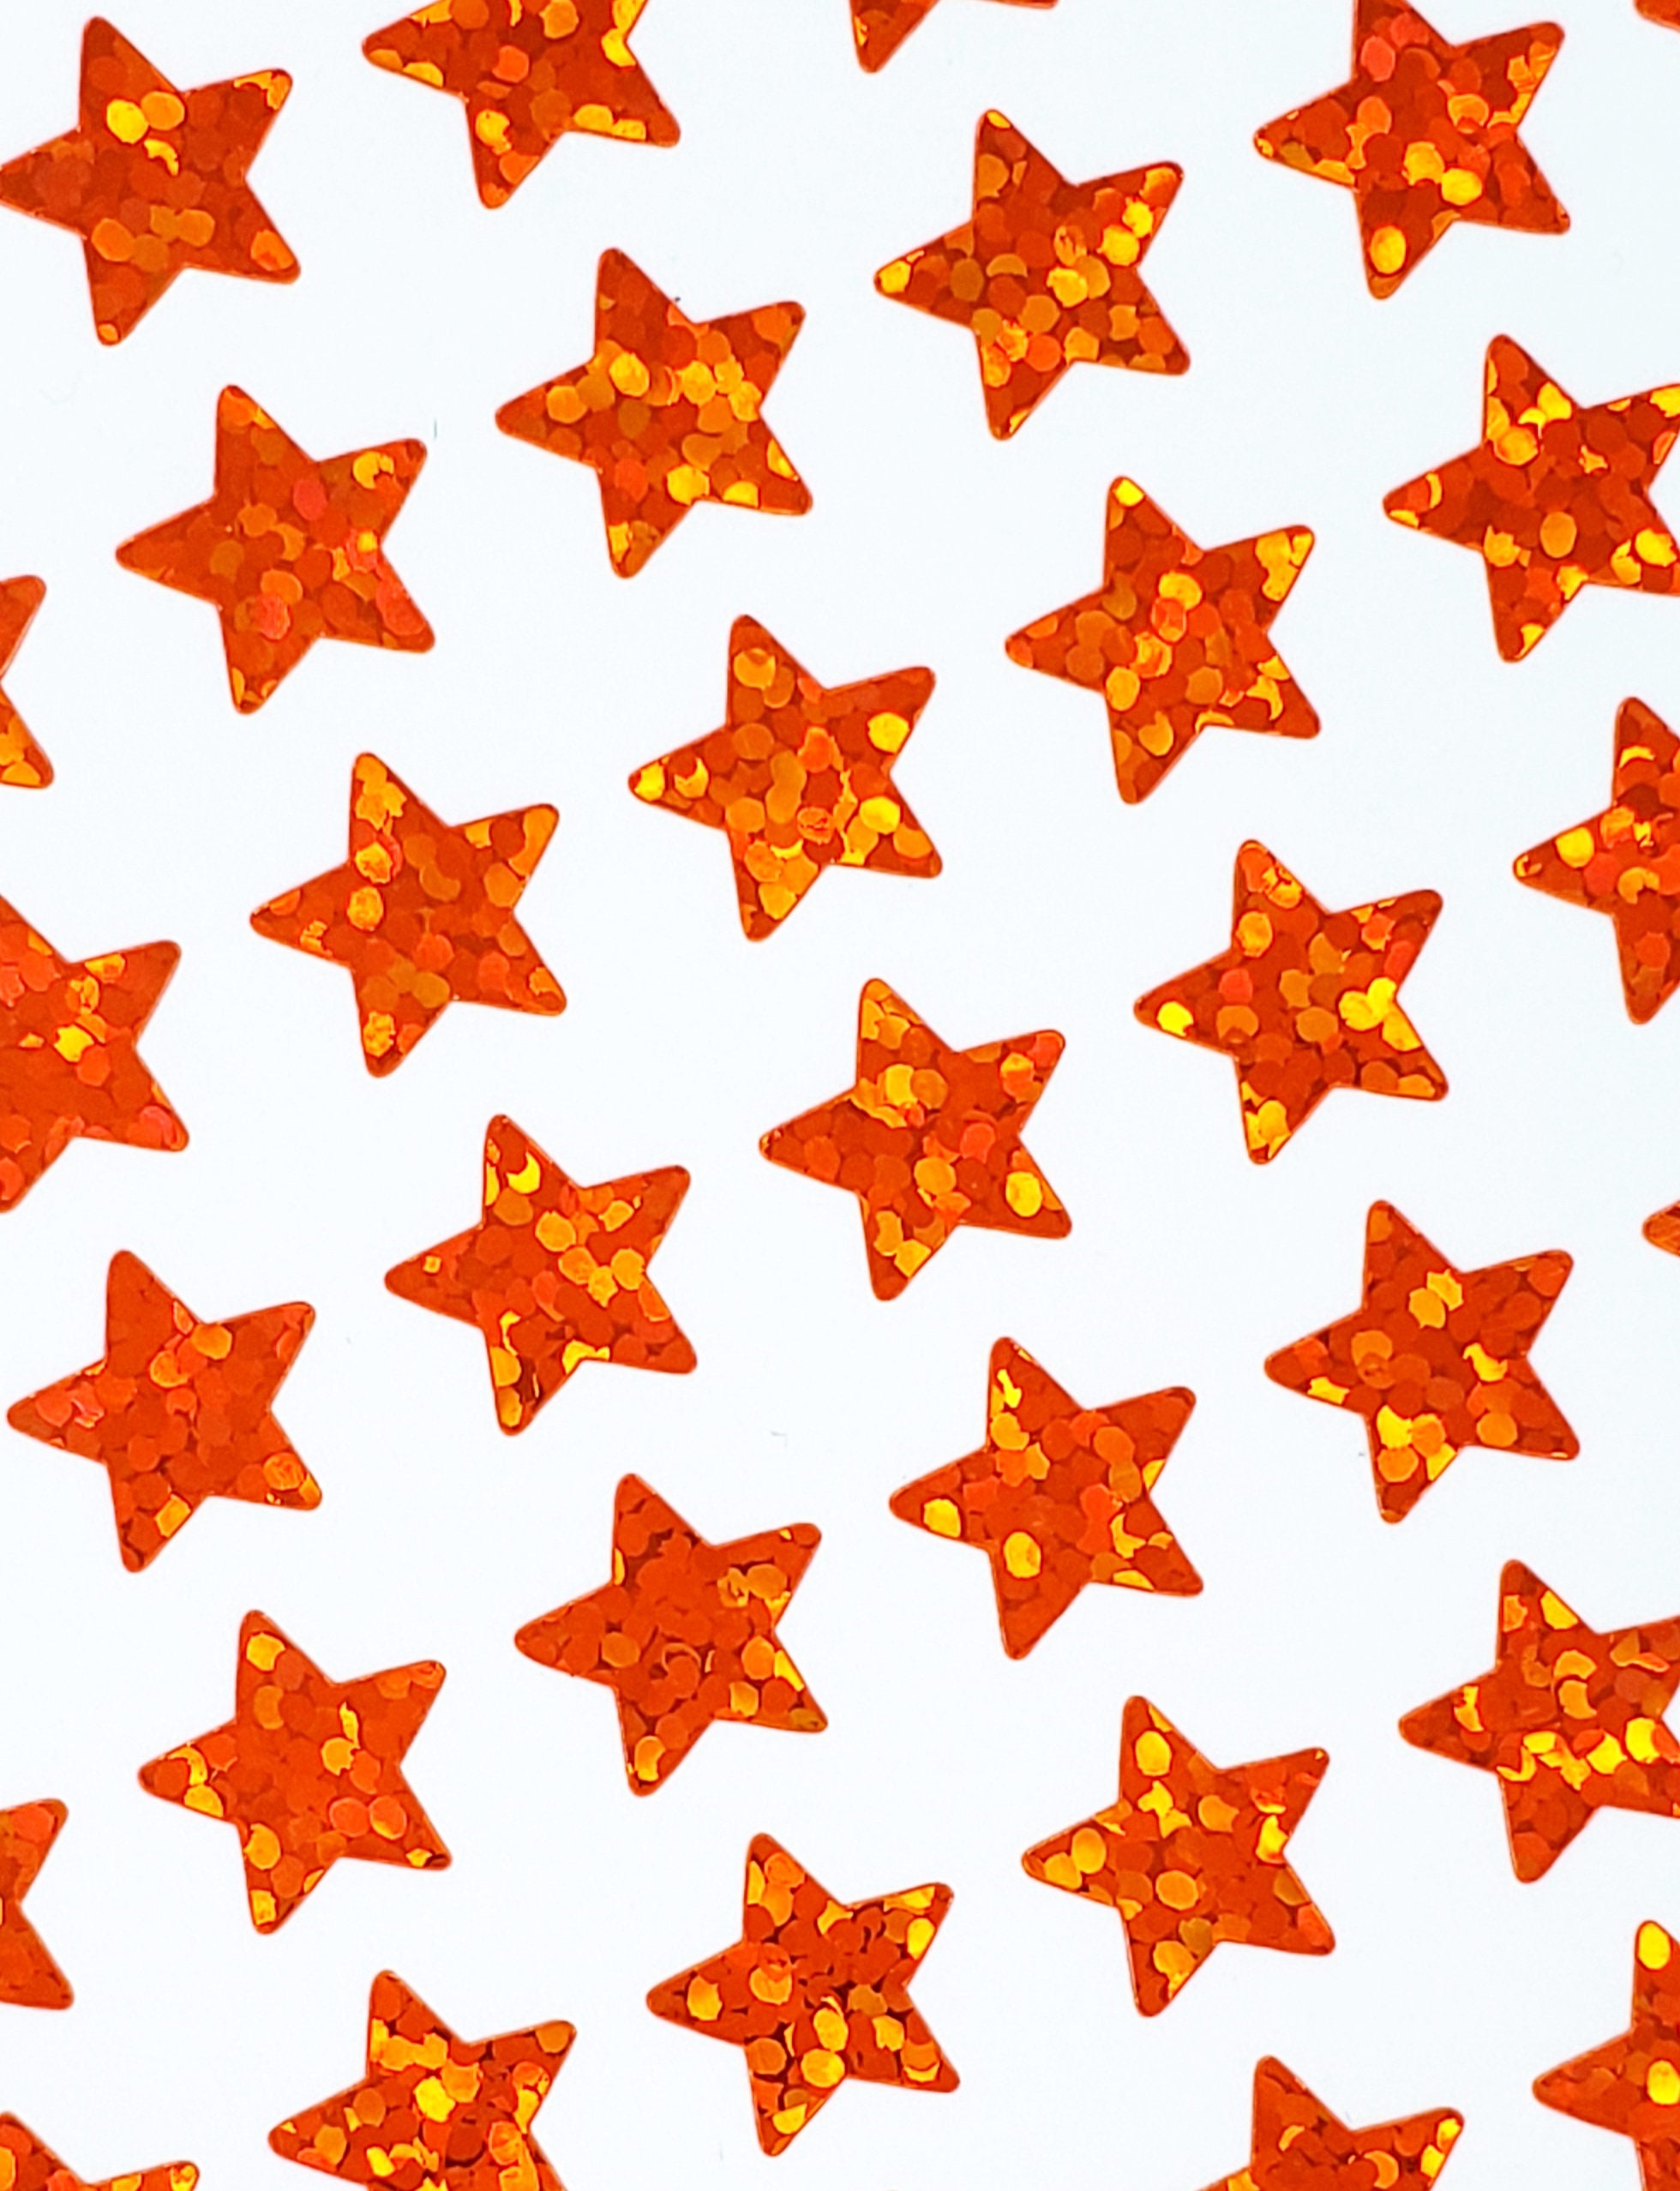 Gold Stars Sticker Sheet, Set of 192 Small Metallic Gold Star